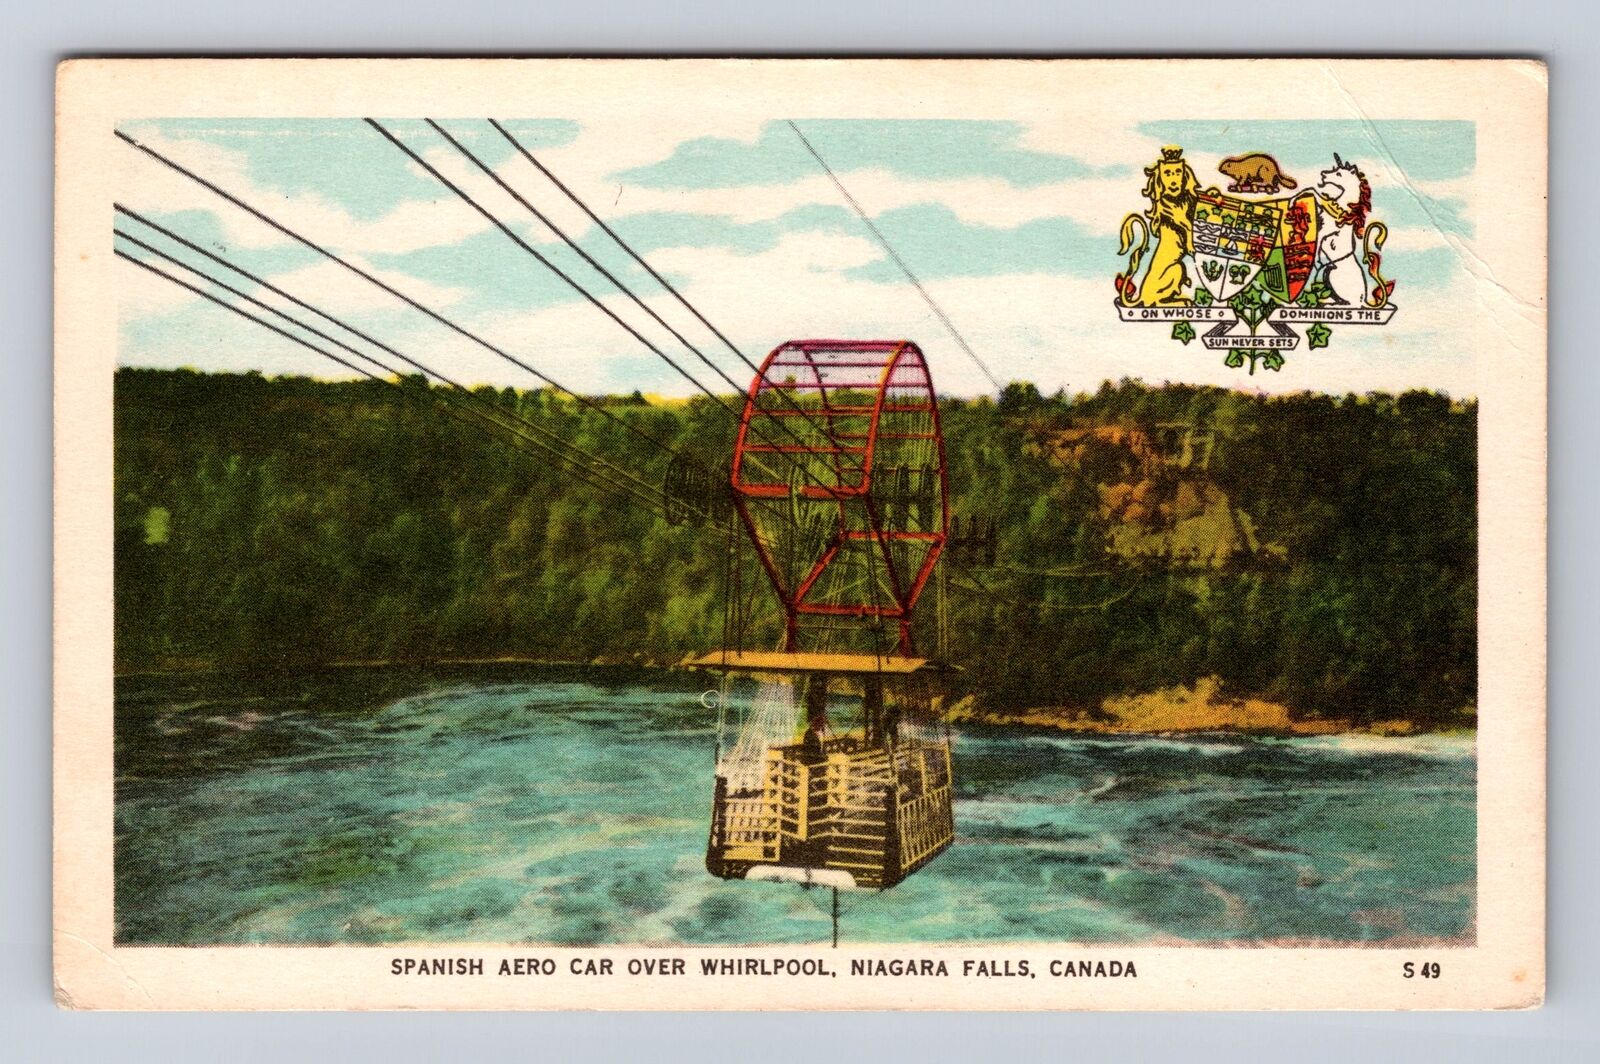 Niagara Falls Ontario-Canada, Spanish Aero Car Over Whirlpool, Vintage Postcard